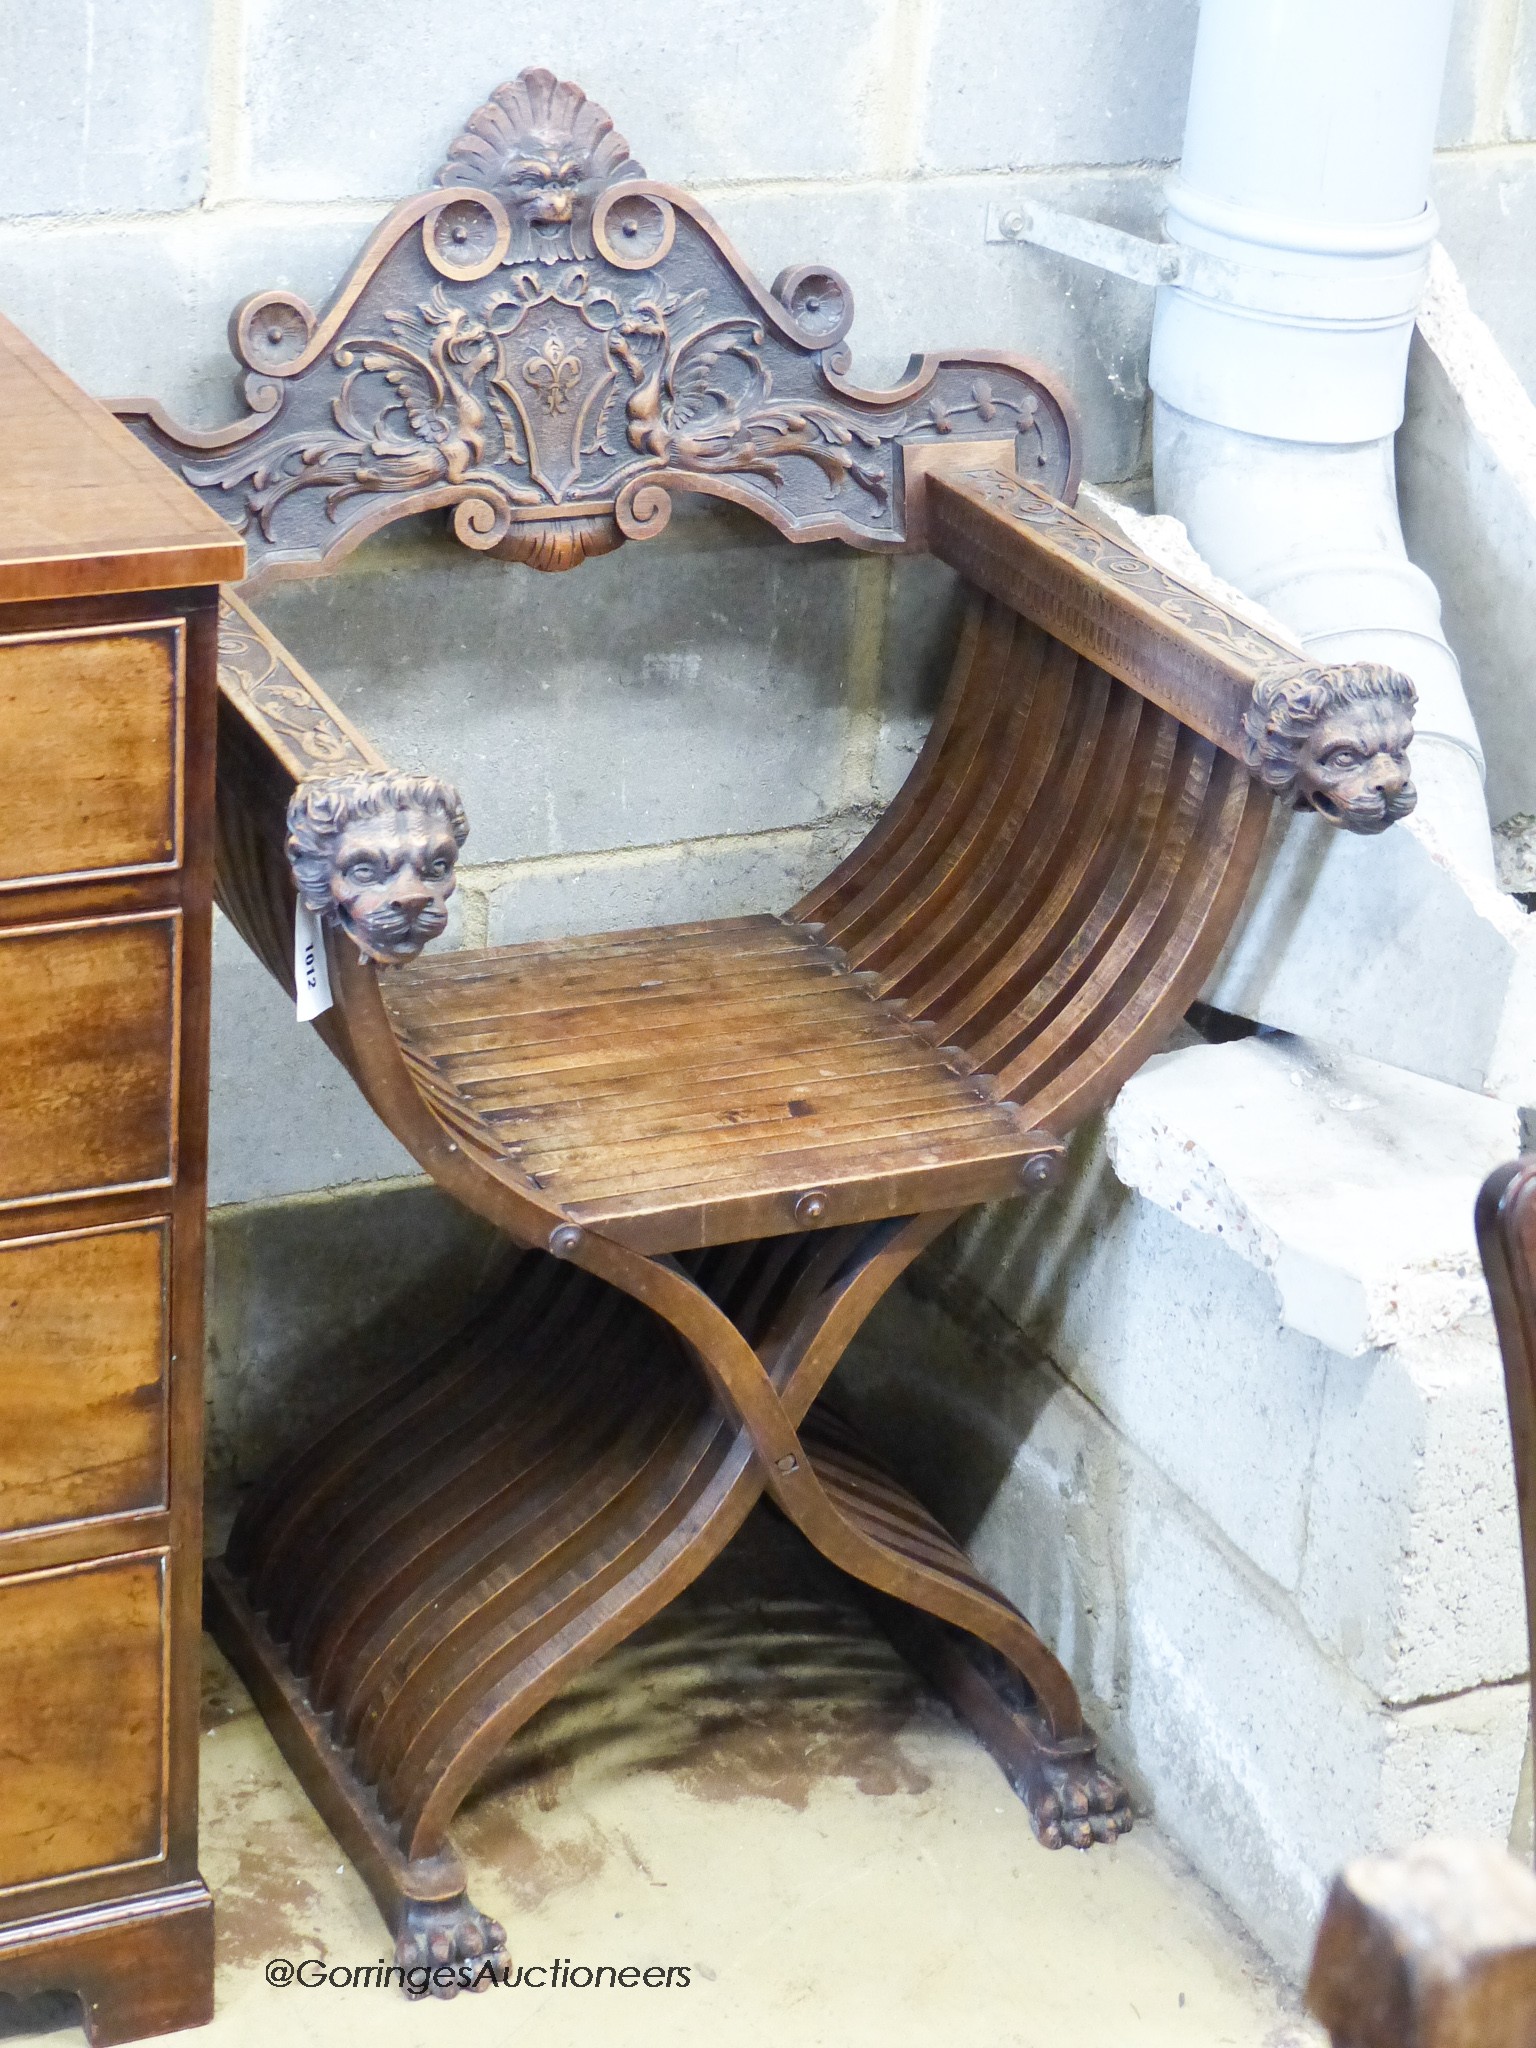 A Sagrada style chair.